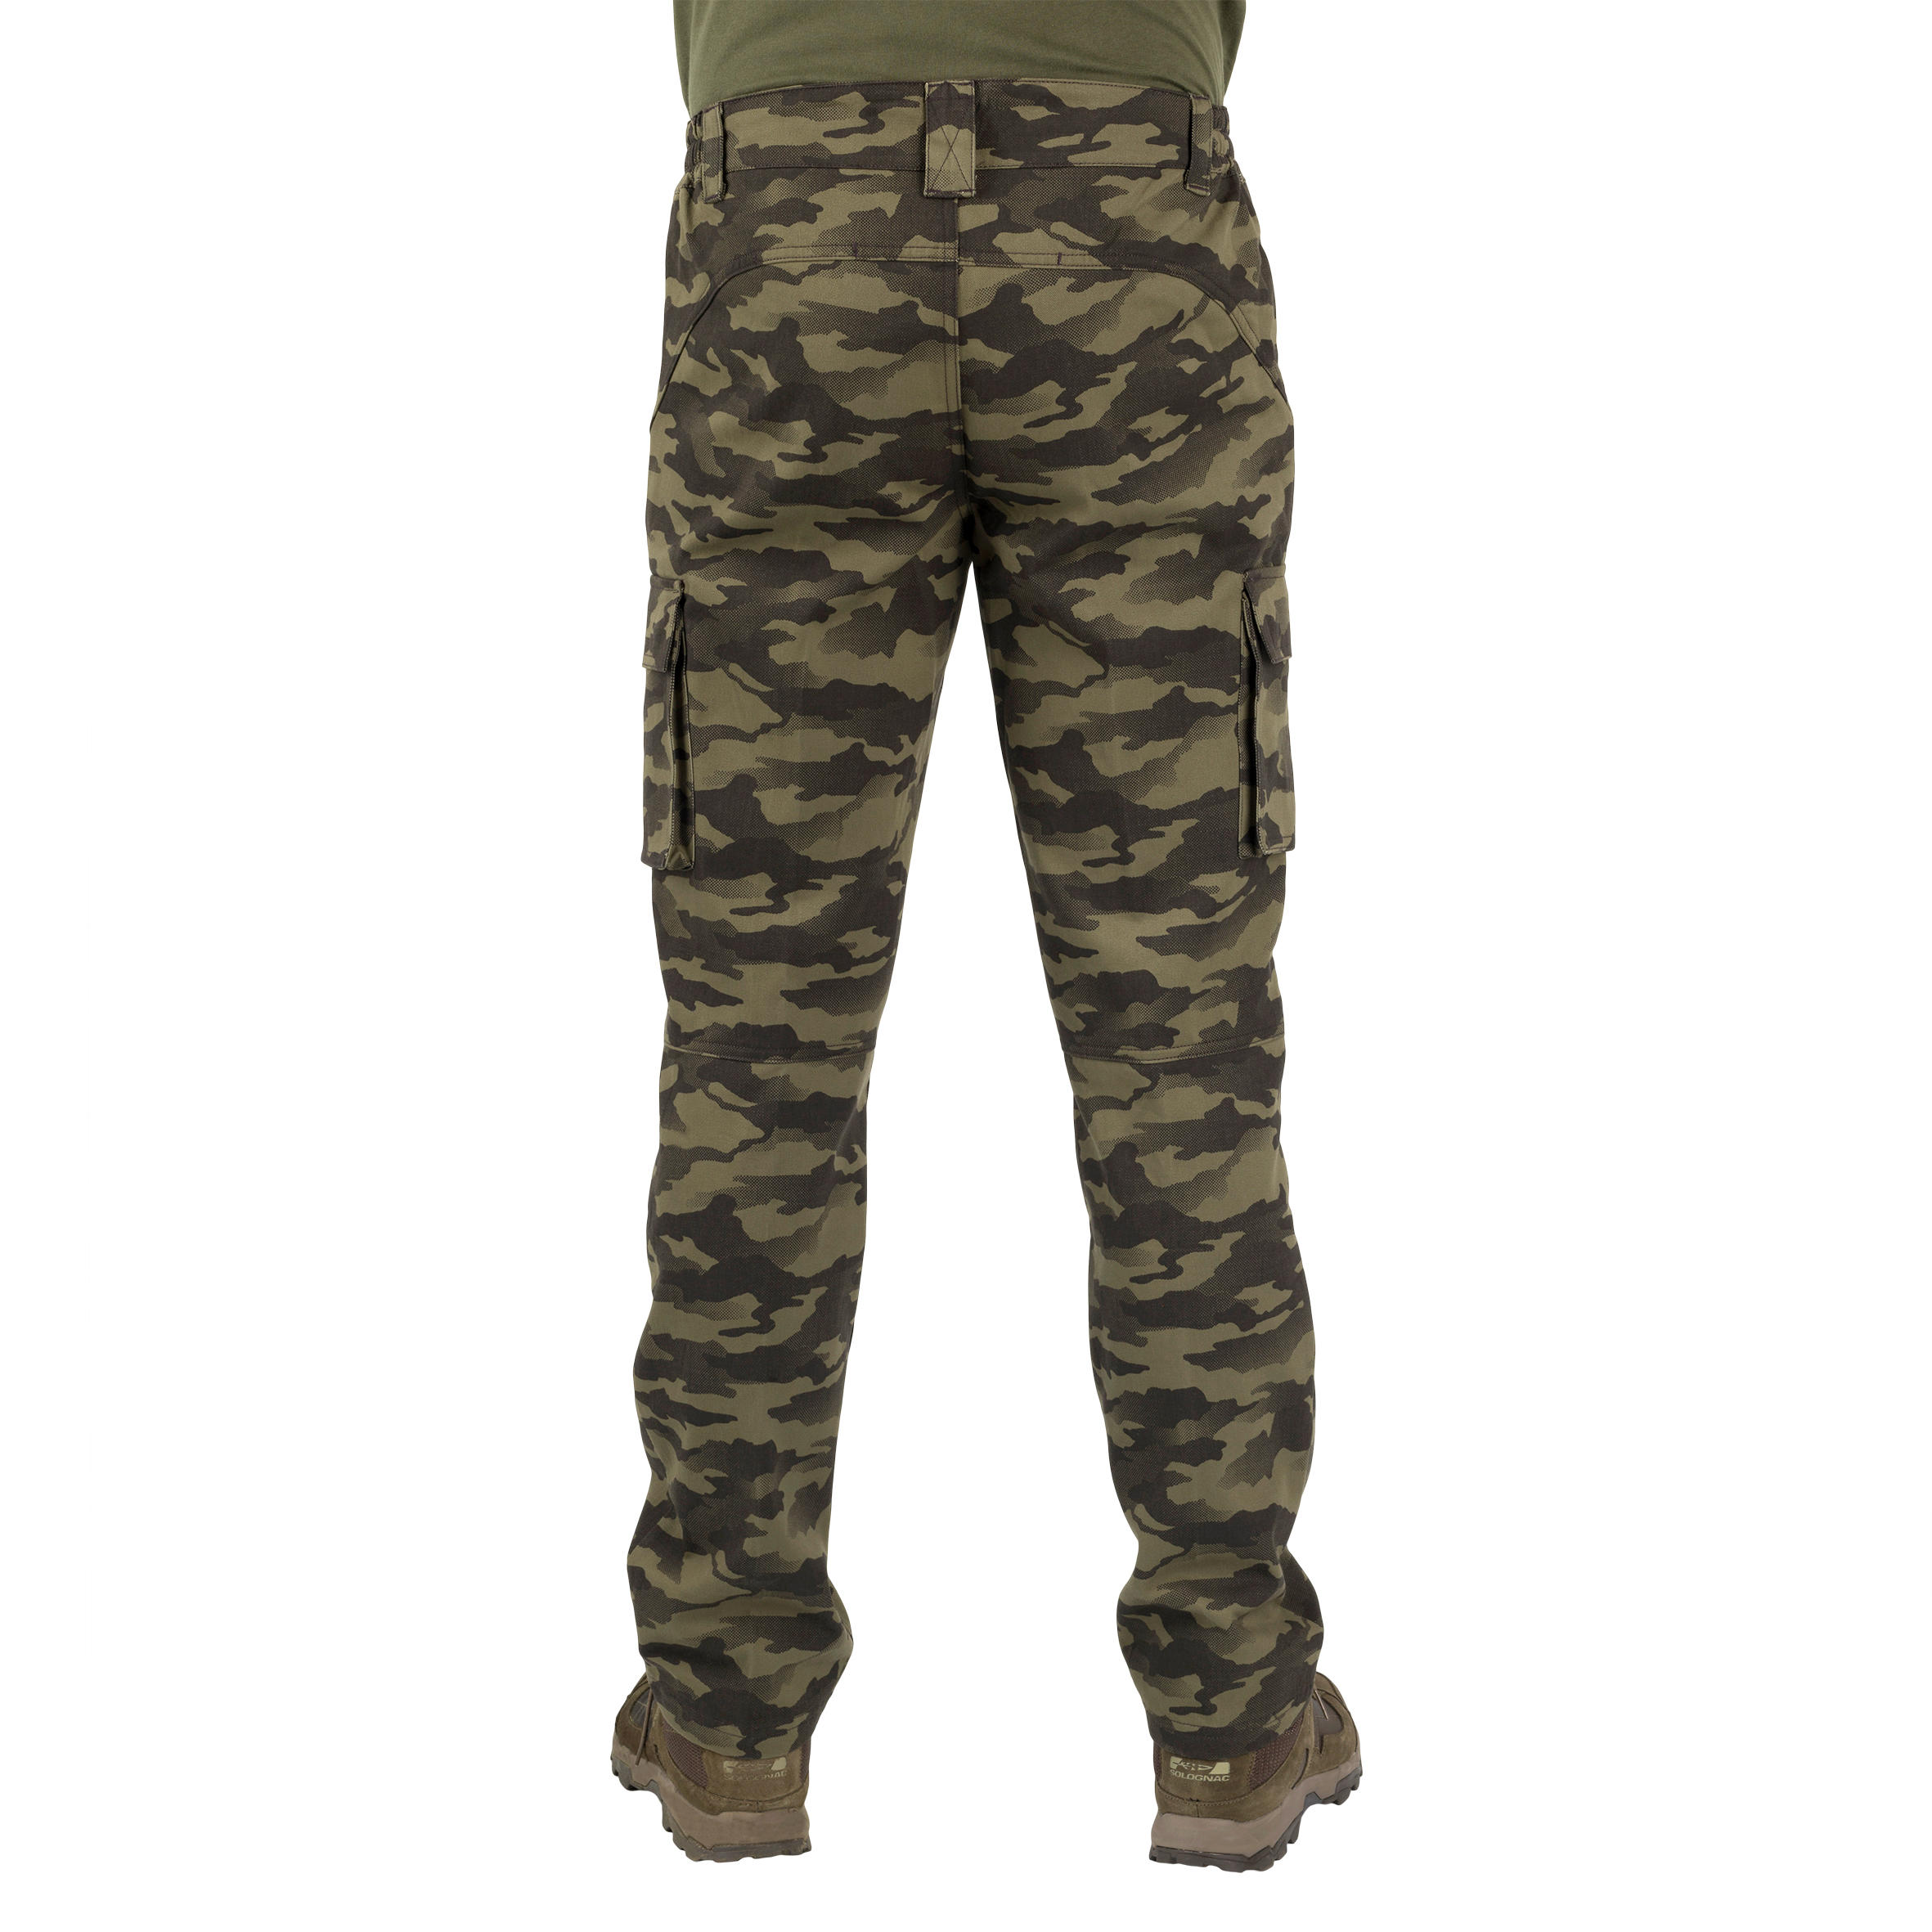 Buy hongqiantai Mens Casual Work Combat Trousers Cotton Military Cargo  Pants Pockets 7 34 at Amazonin